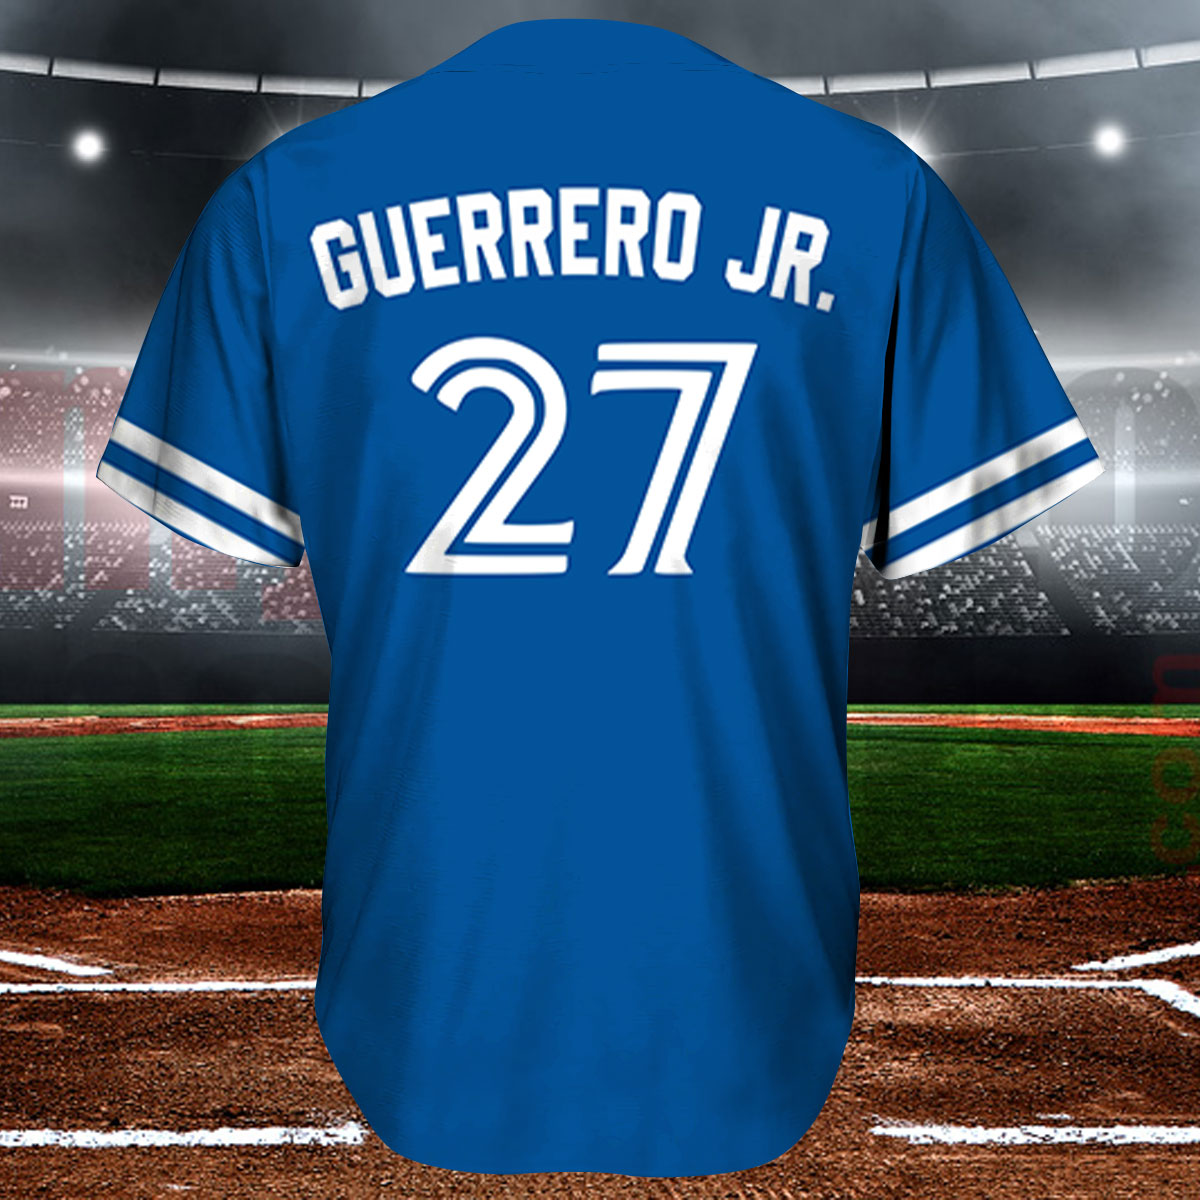 Toronto Blue Jays Vladimir Guerrero Jr. Jersey Giveaway Night 2023